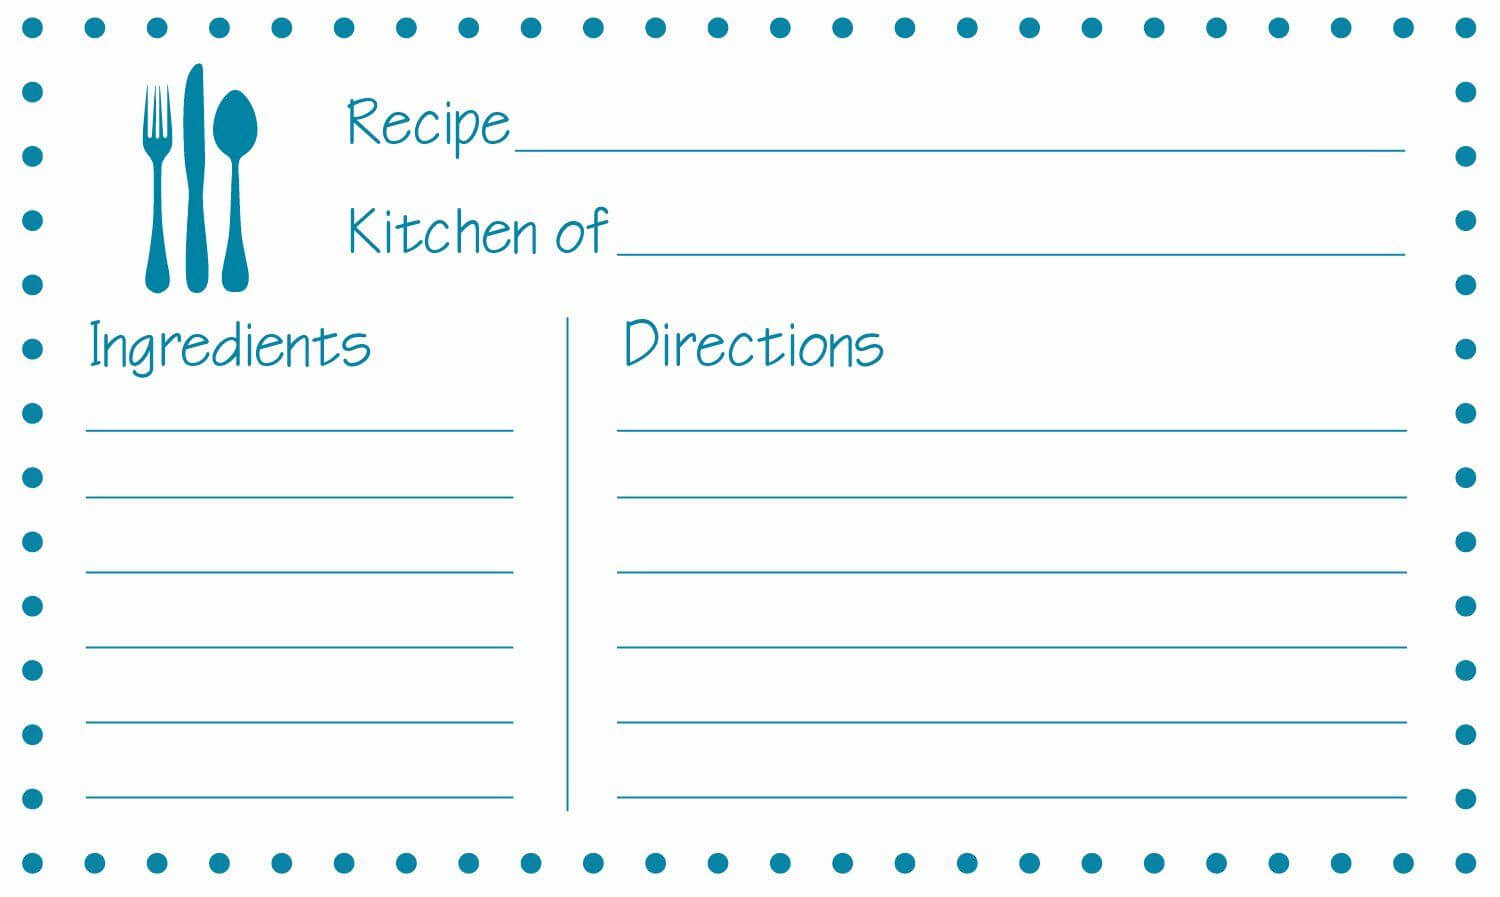 Free Editable Recipe Card Templates For Microsoft Word With Regard To Free Recipe Card Templates For Microsoft Word